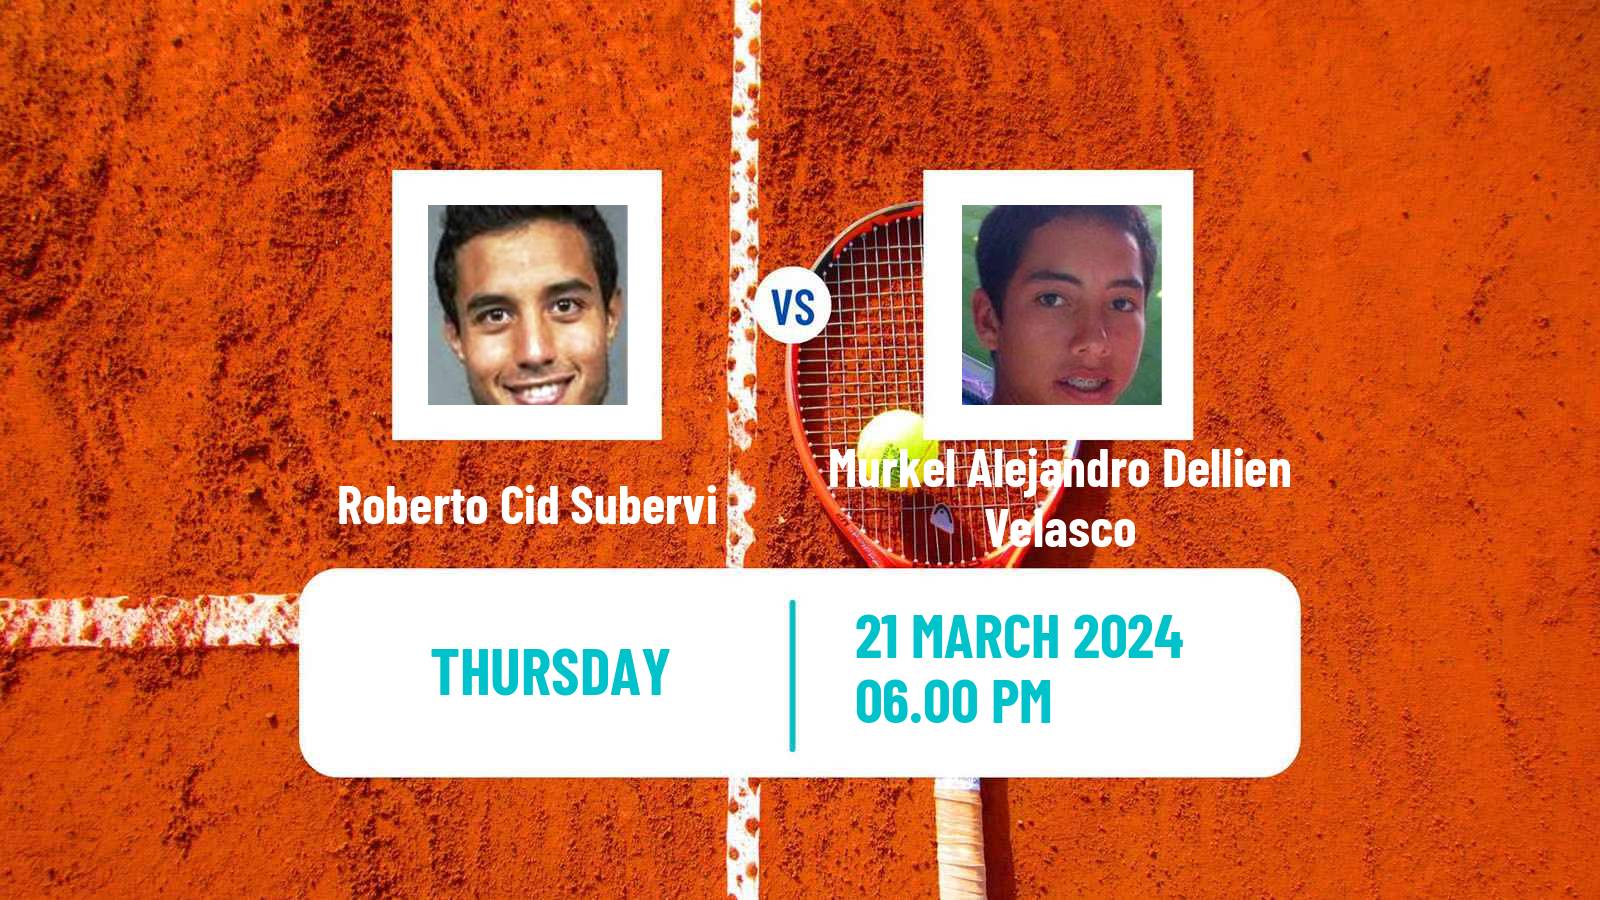 Tennis Merida Challenger Men Roberto Cid Subervi - Murkel Alejandro Dellien Velasco